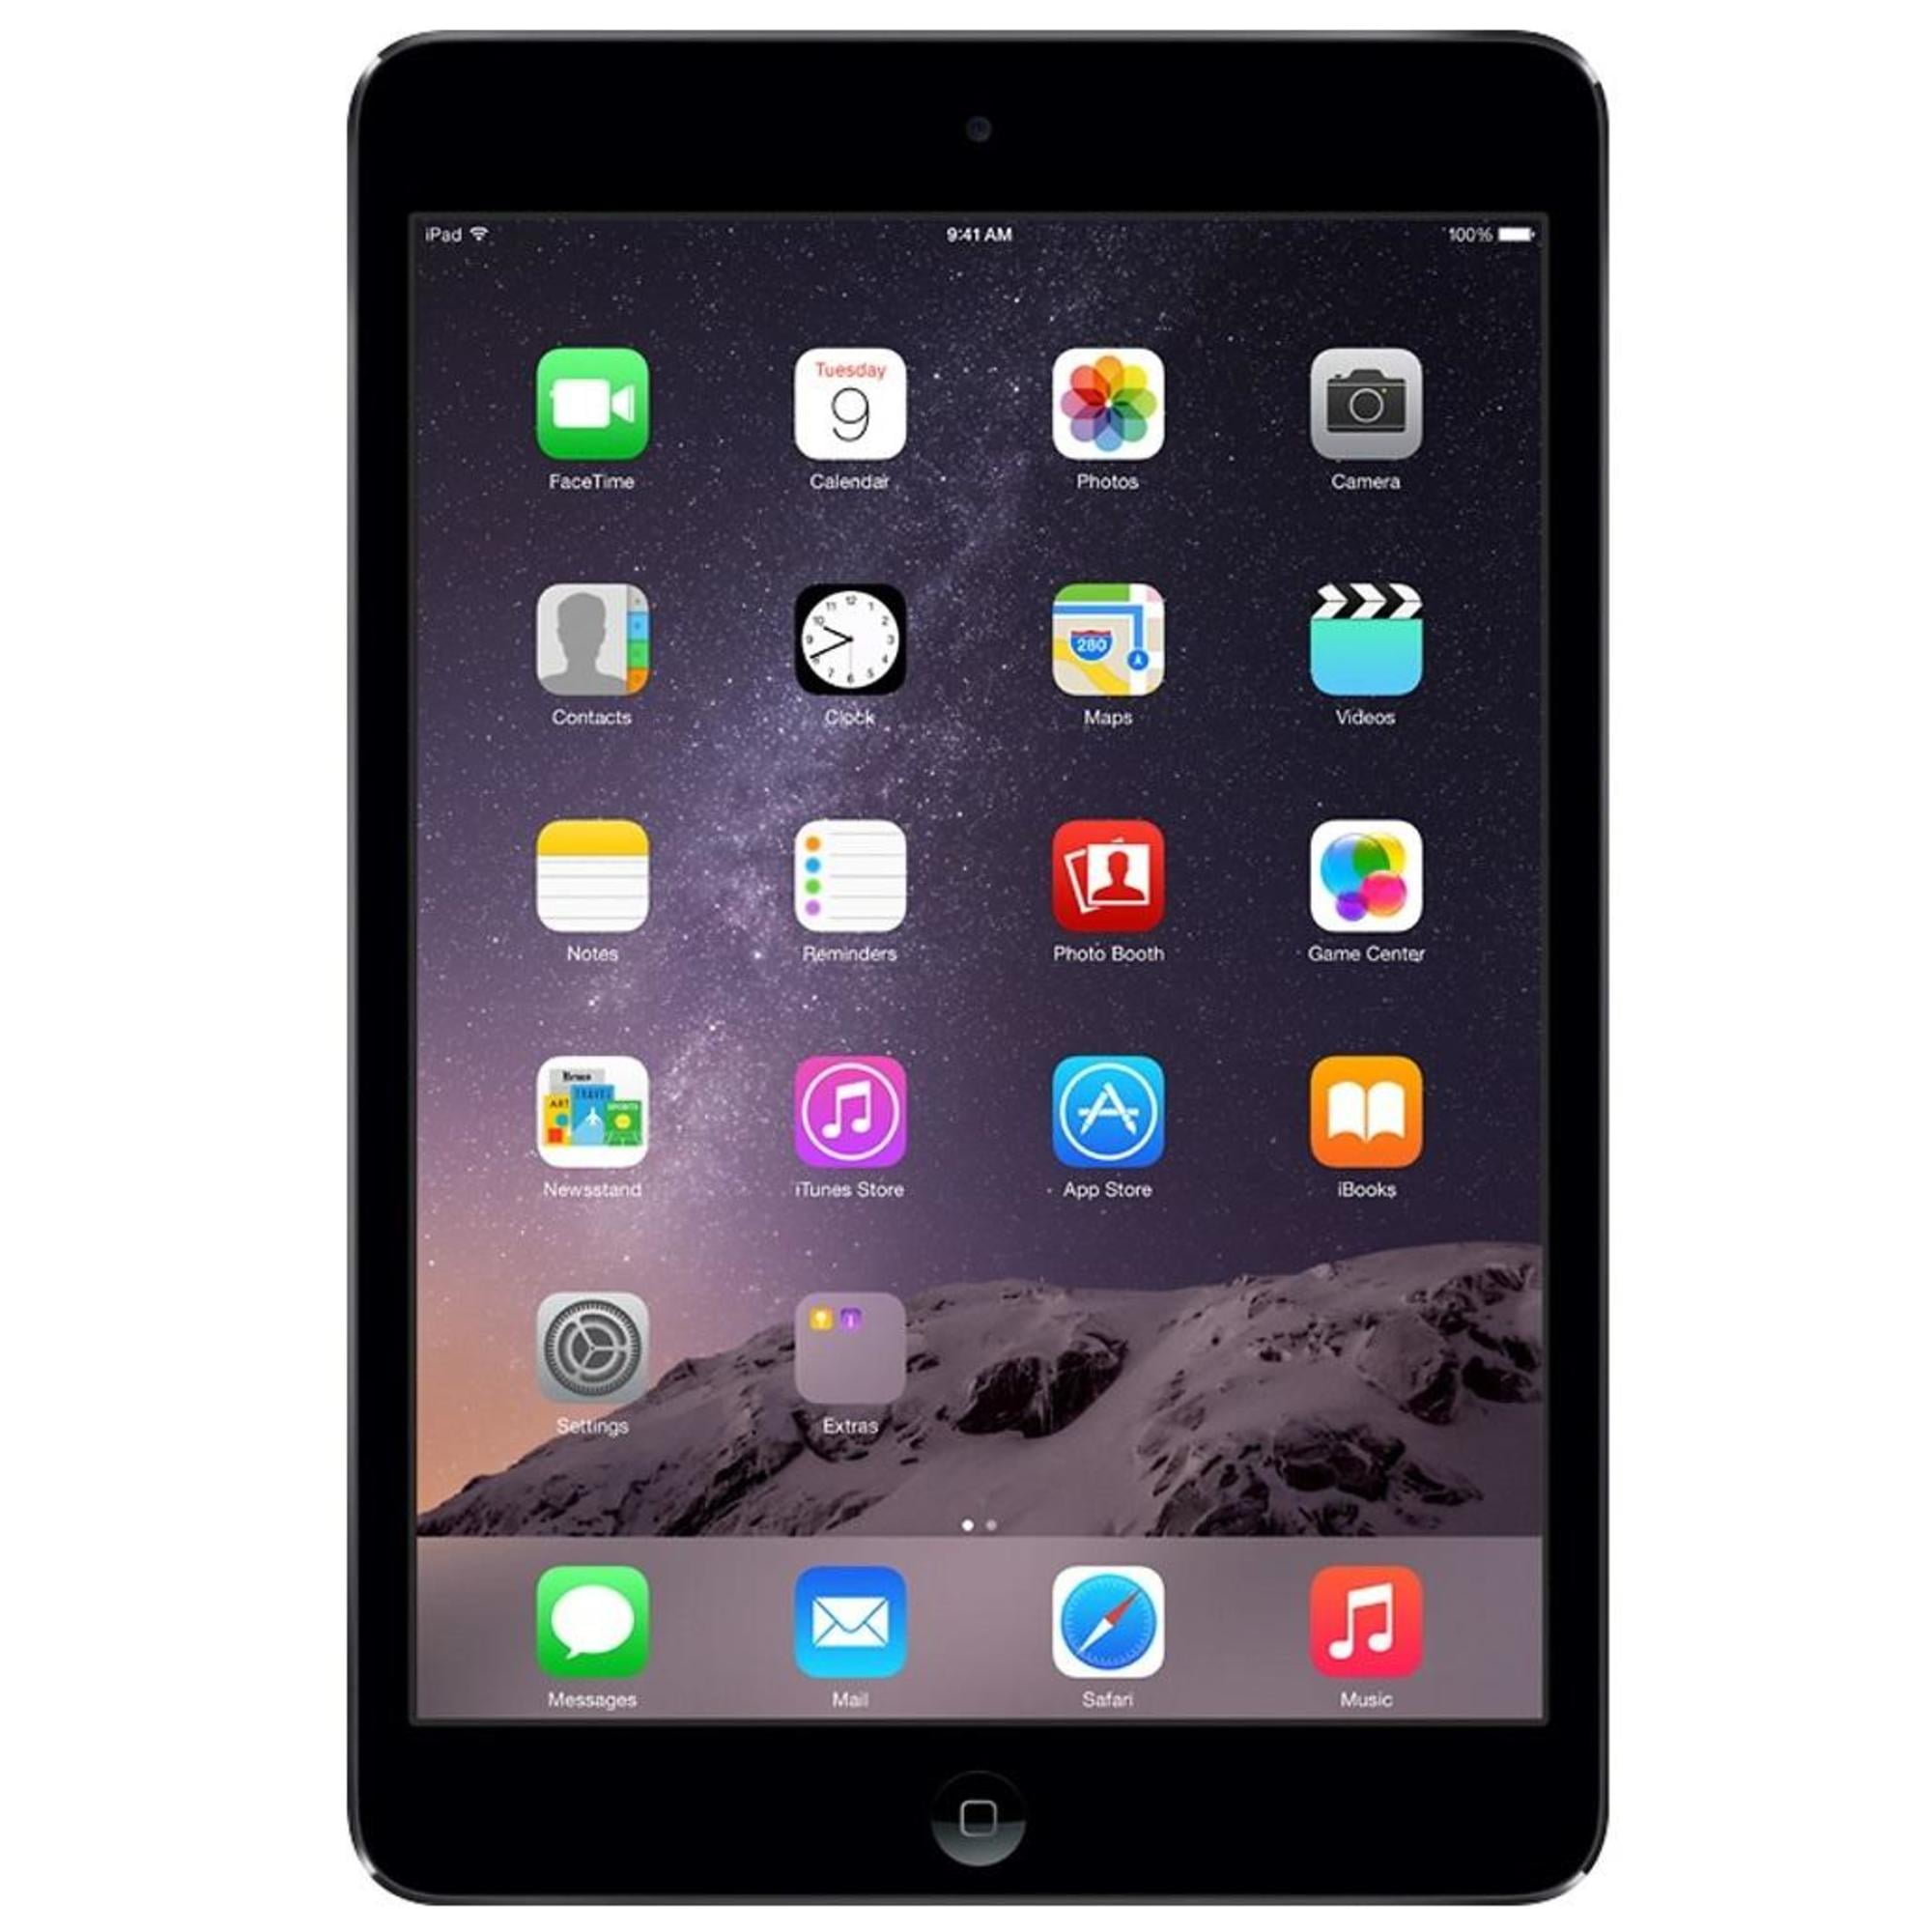 Apple iPad Mini 2 32GB with Retina Display Wi-Fi Tablet - Gray (Refurbished)